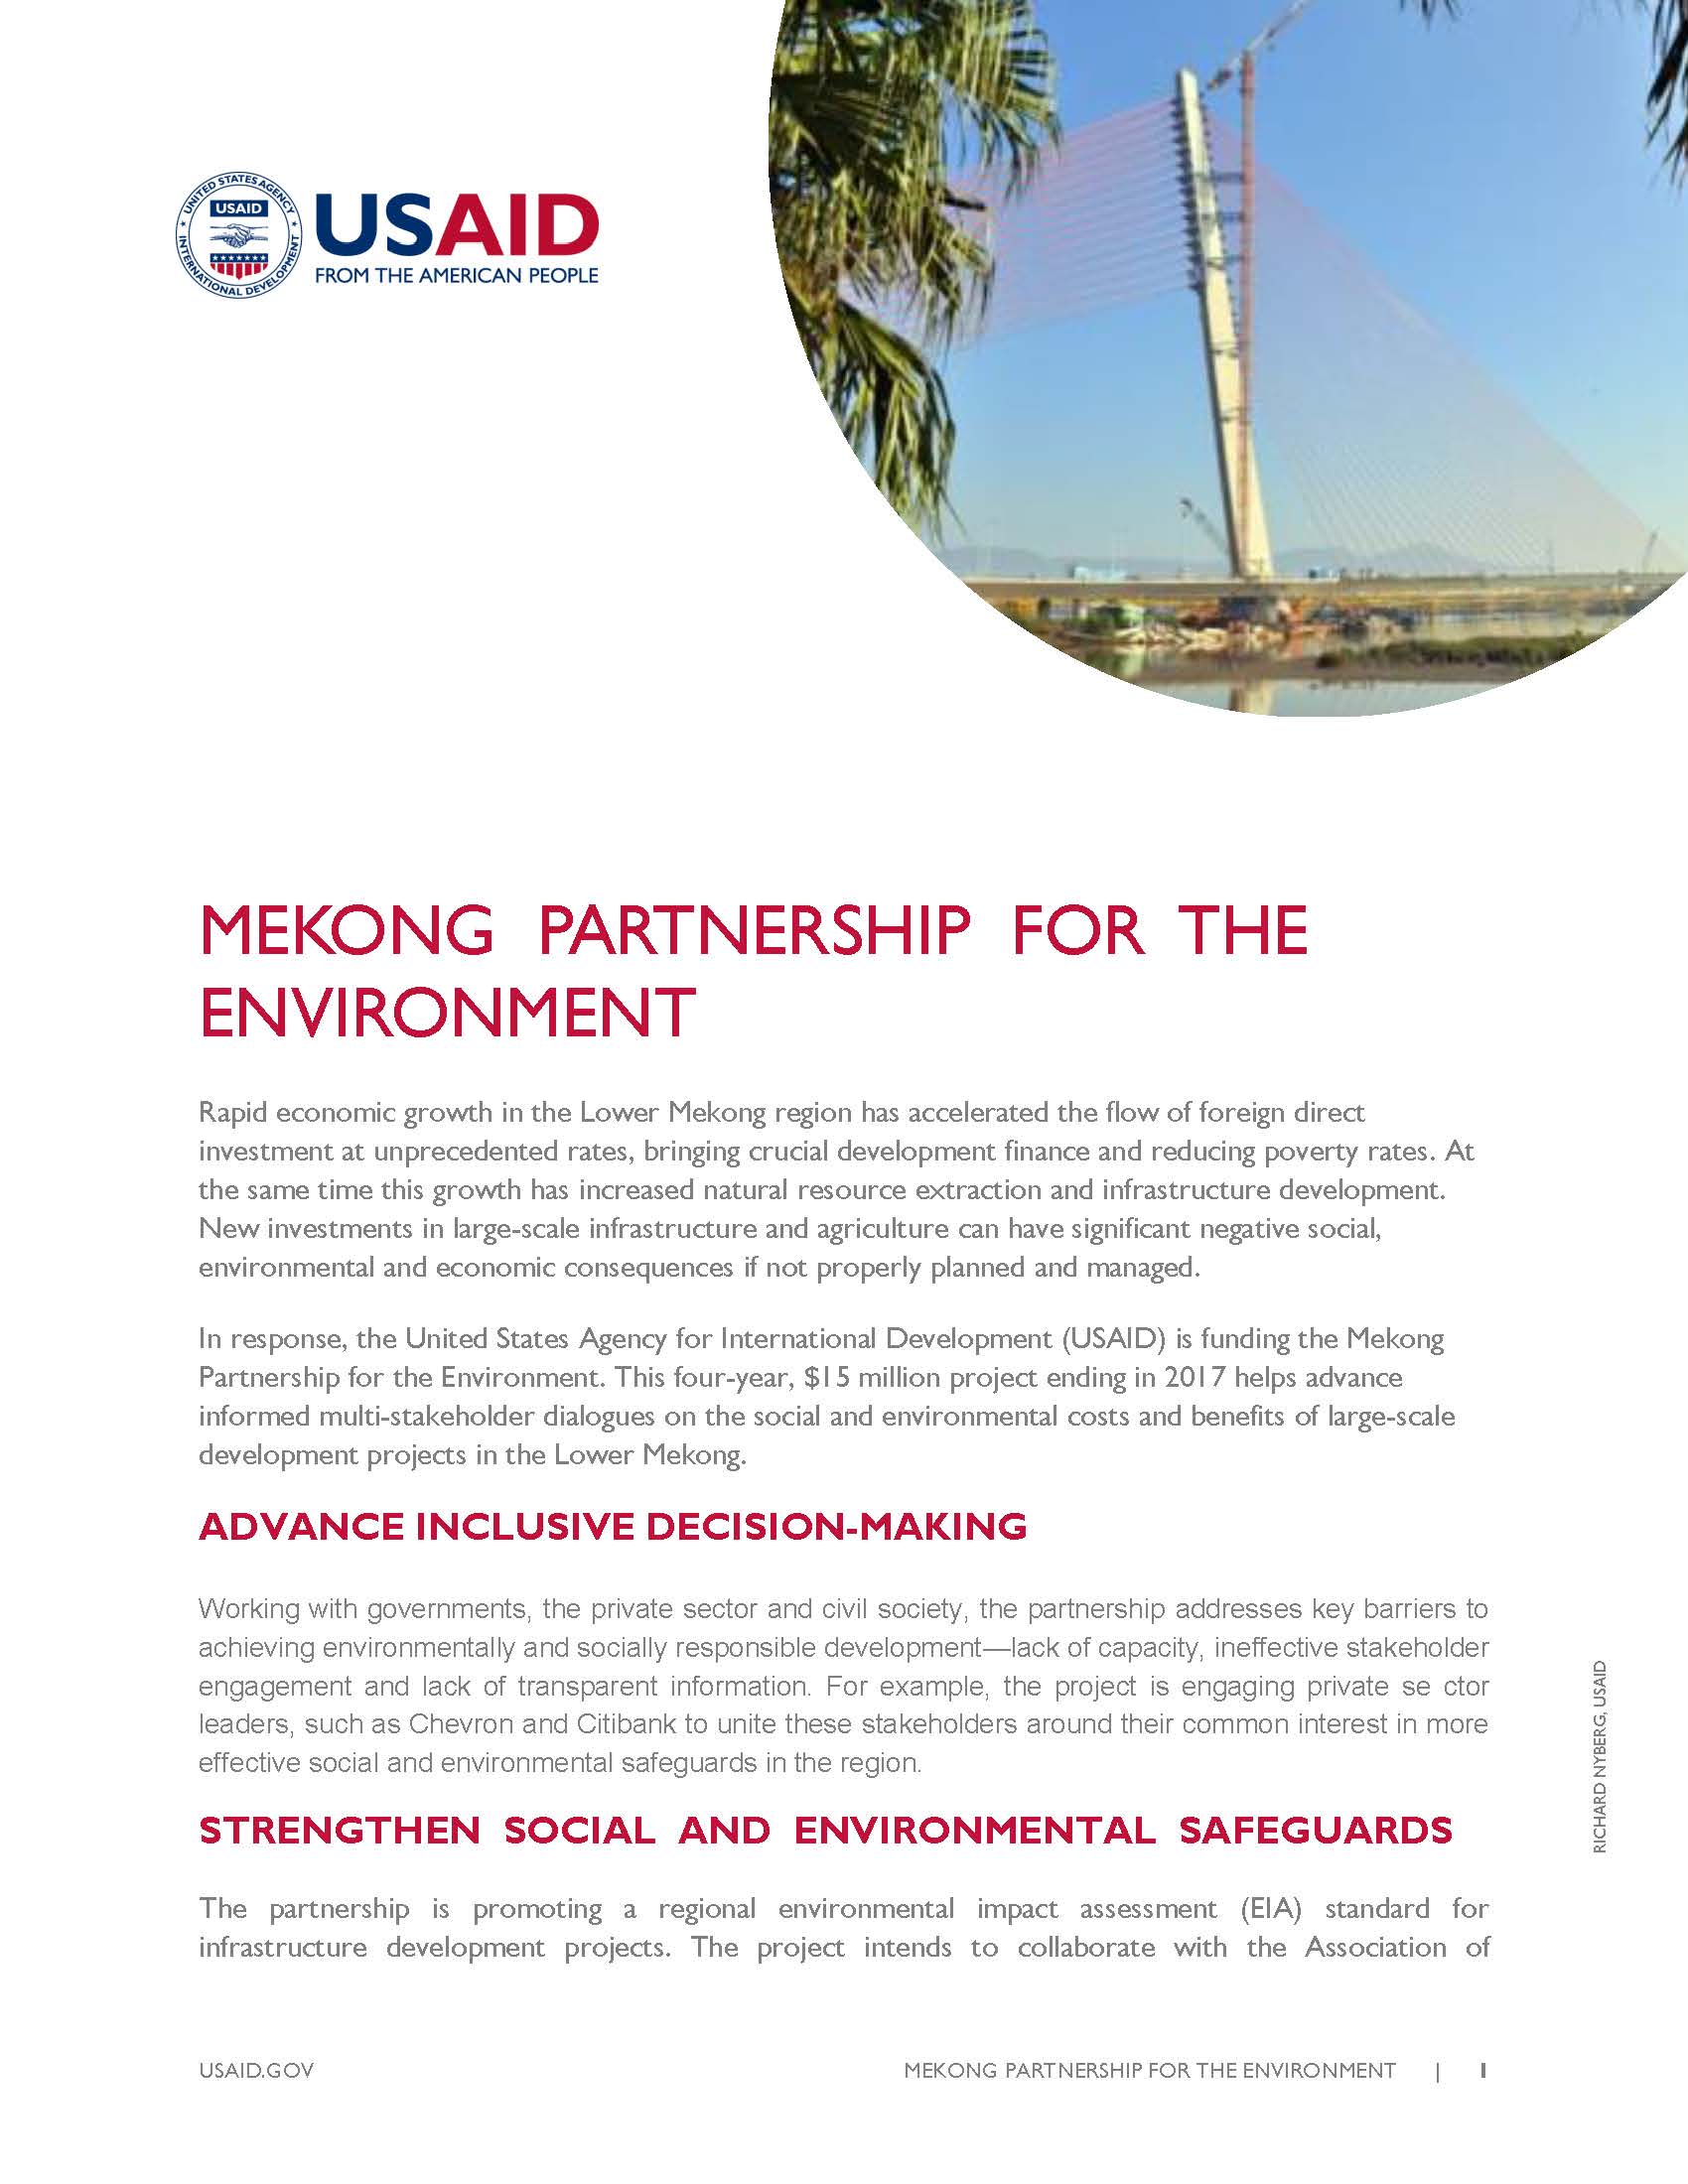 Mekong Partnership for the Environment